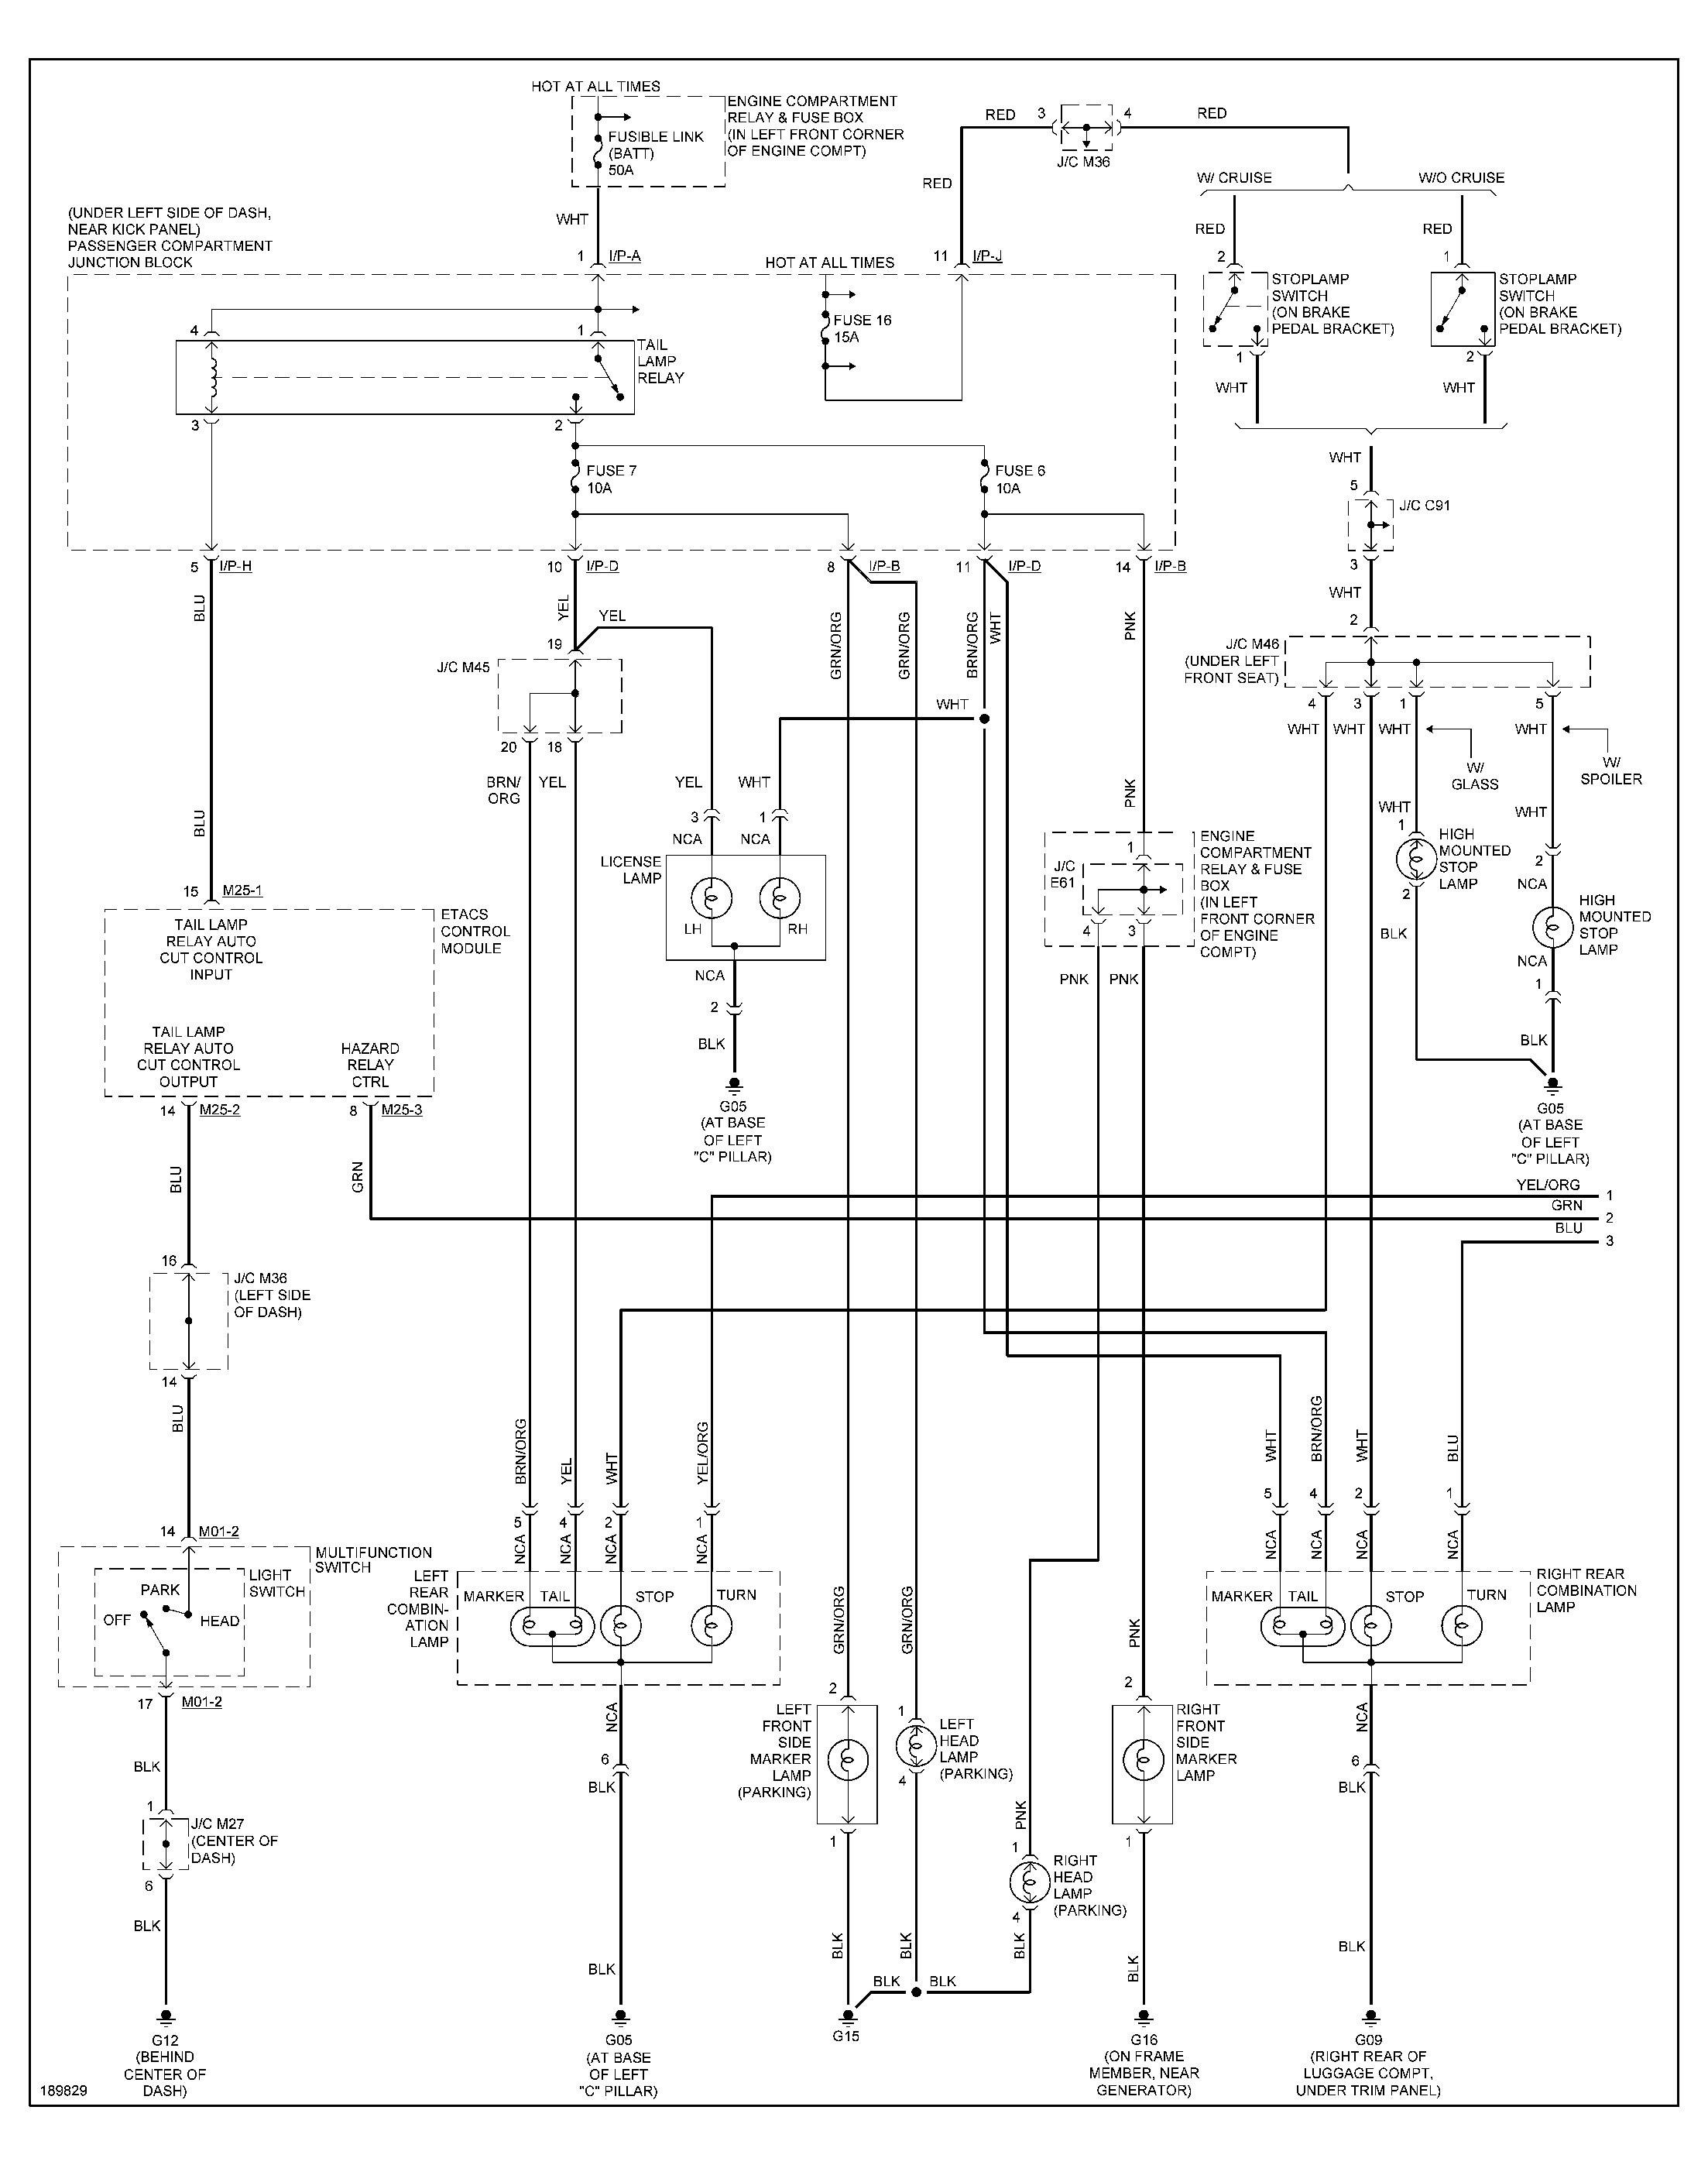 Hyundai Accent Engine Diagram Car 04 Hyundai Accent Engine Diagram Wiring Diagram Hyundai Accent Of Hyundai Accent Engine Diagram